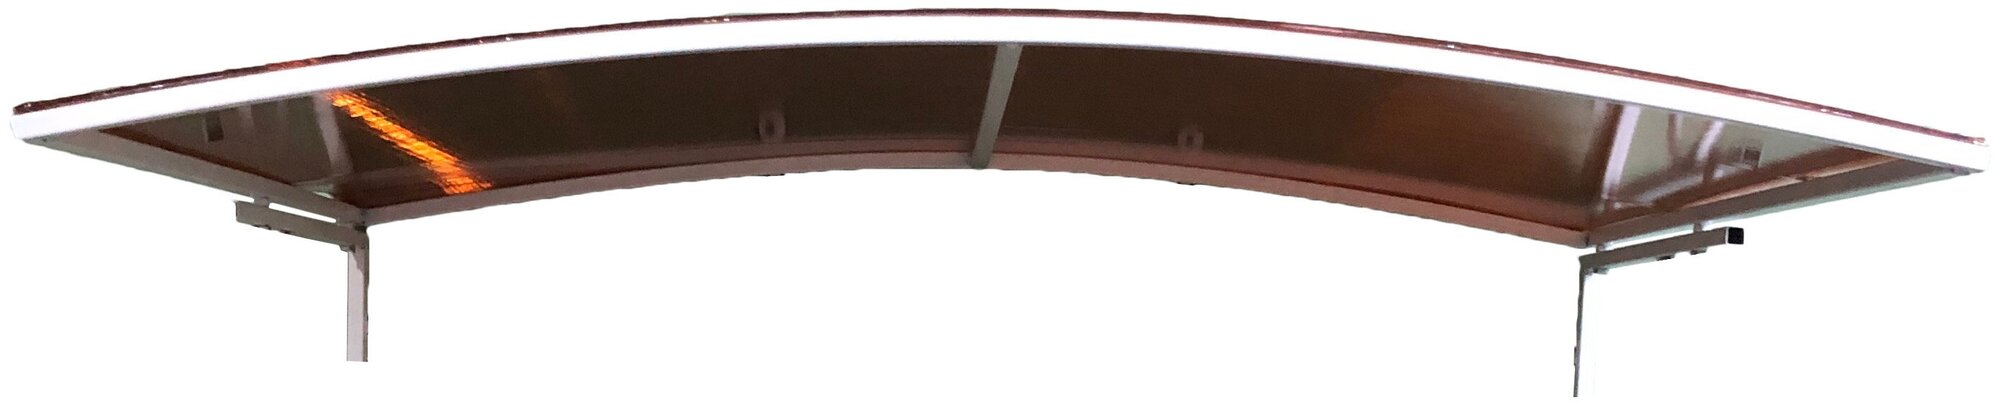 Козырек над кондиционером YSK16, ArtCore, 1000х400х200 мм, белый каркас с коричневым поликарбонатом - фотография № 3